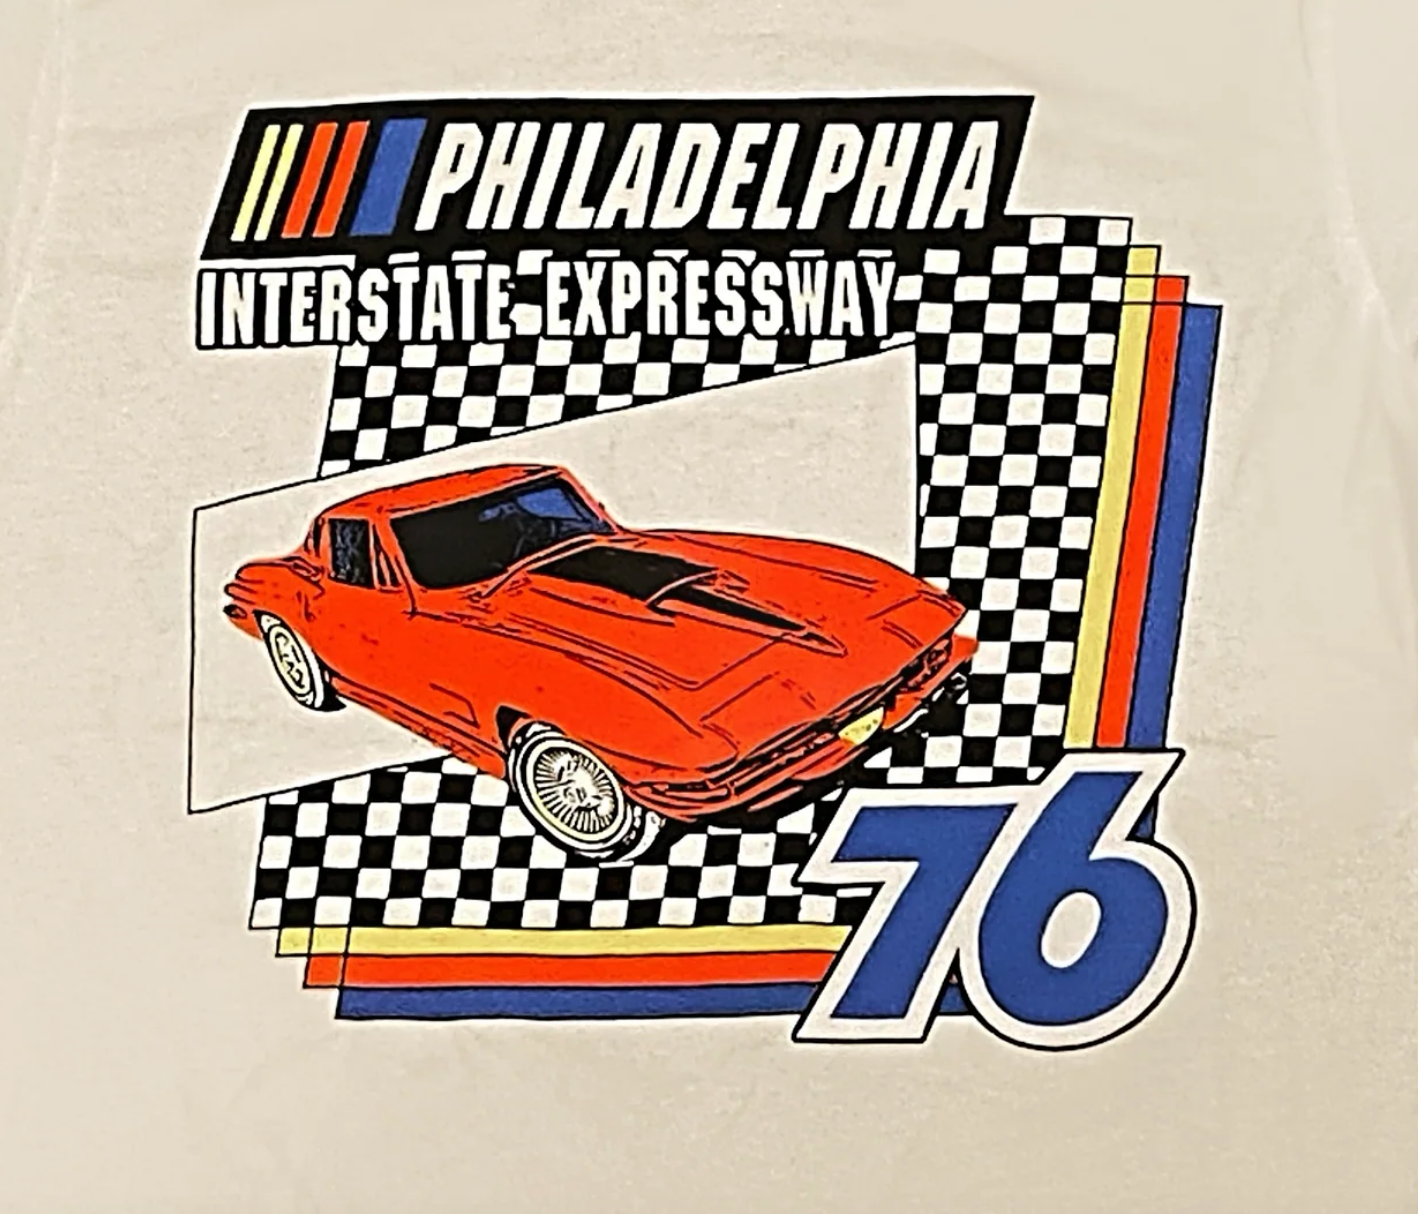 Philadelphia Interstate Expressway 76